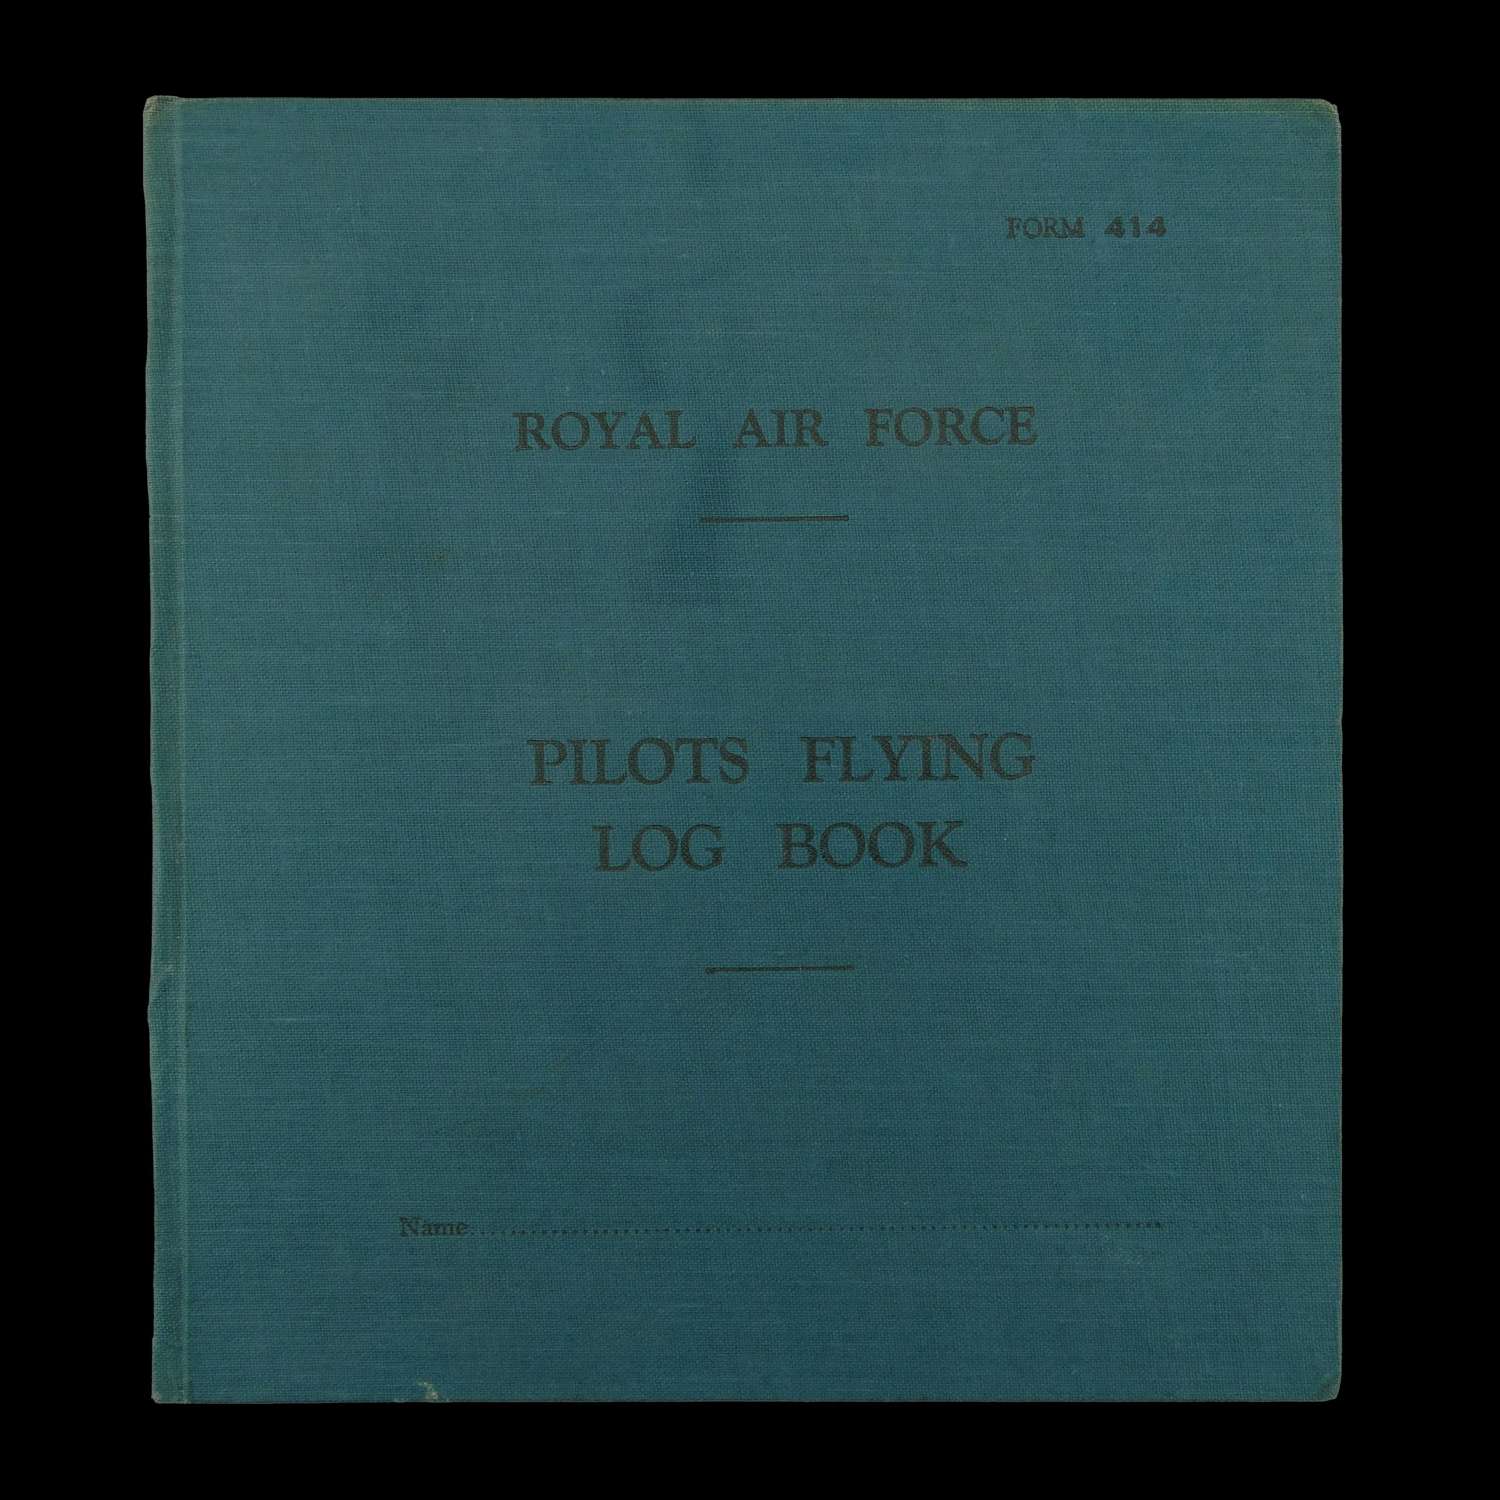 RAF pilot's flying log book